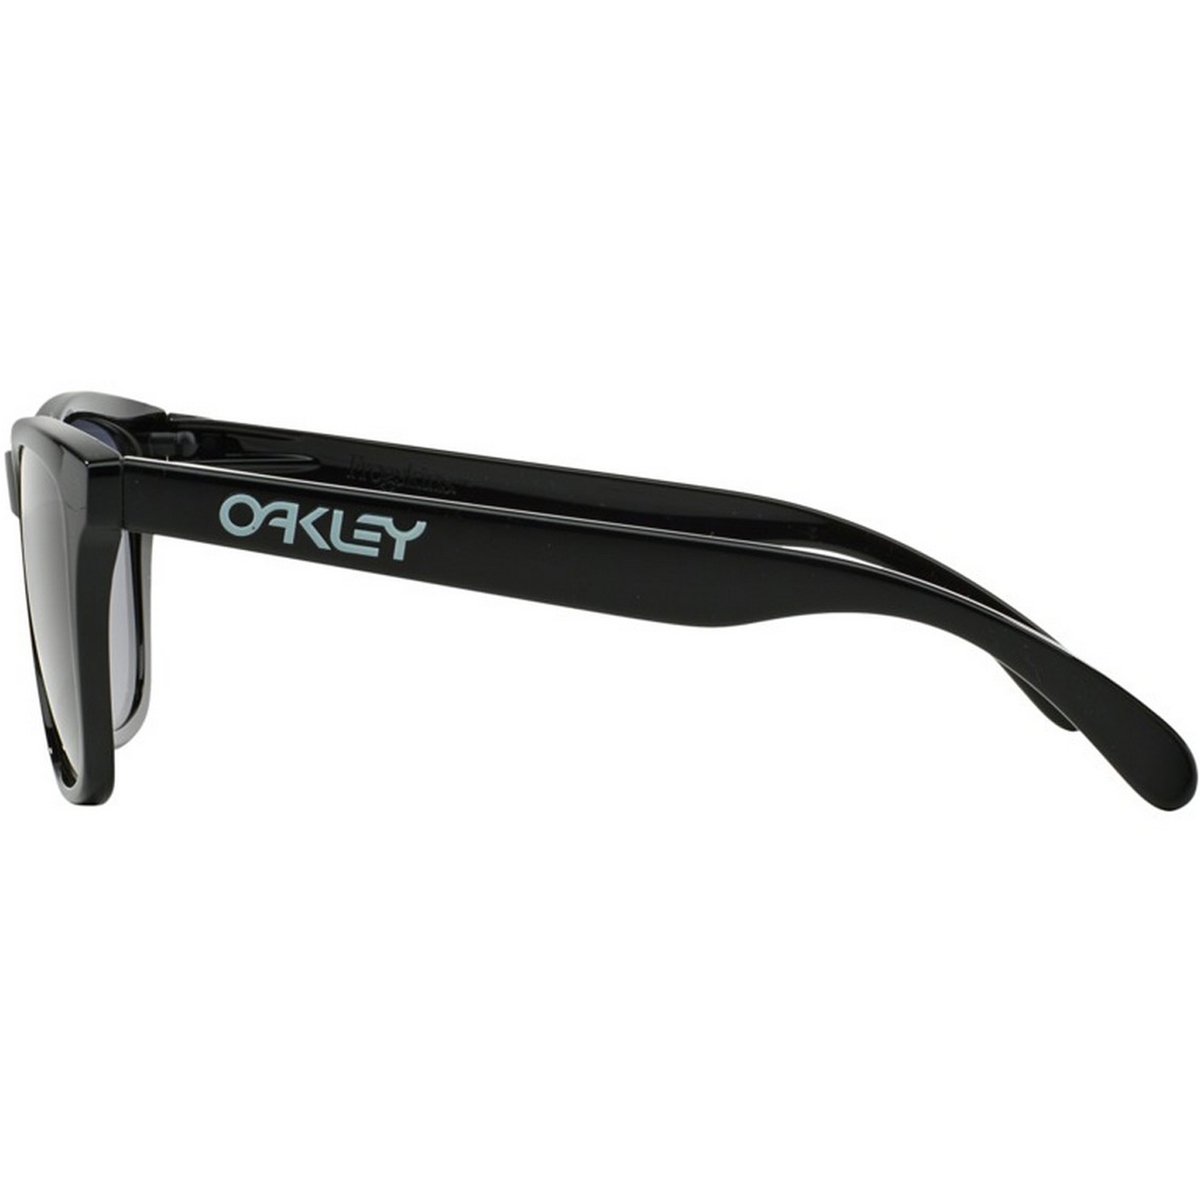 Oakley Unisex Sunglass Wayfarer OK-9013-24-306